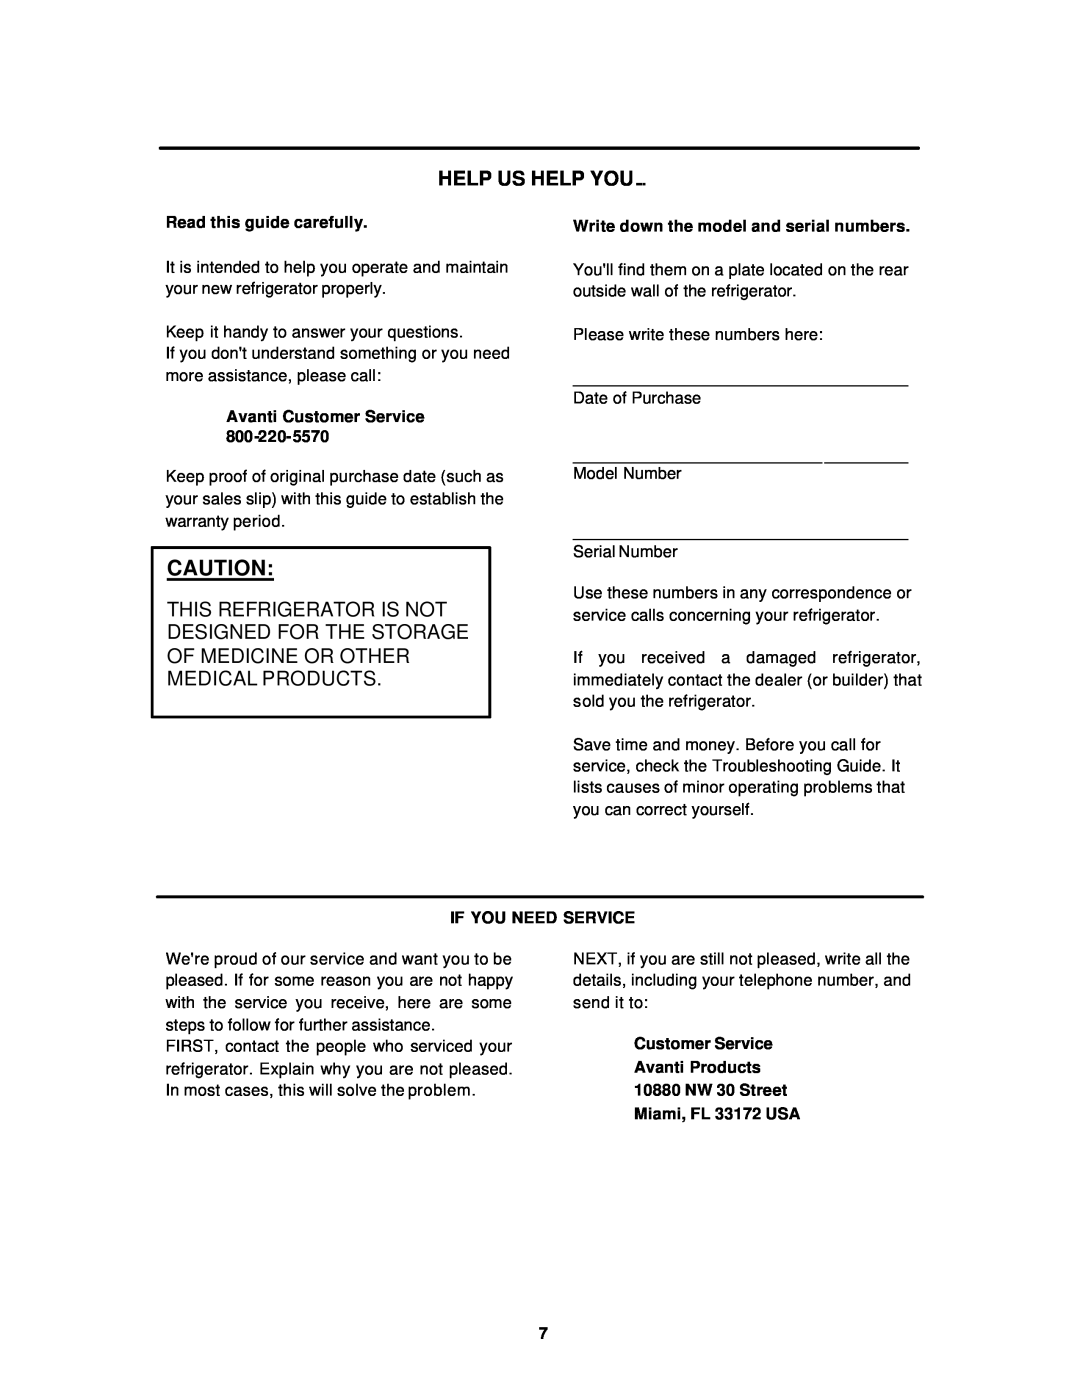 Avanti EC149W instruction manual Help Us Help You, Read this guide carefully, Avanti Customer Service, If You Need Service 